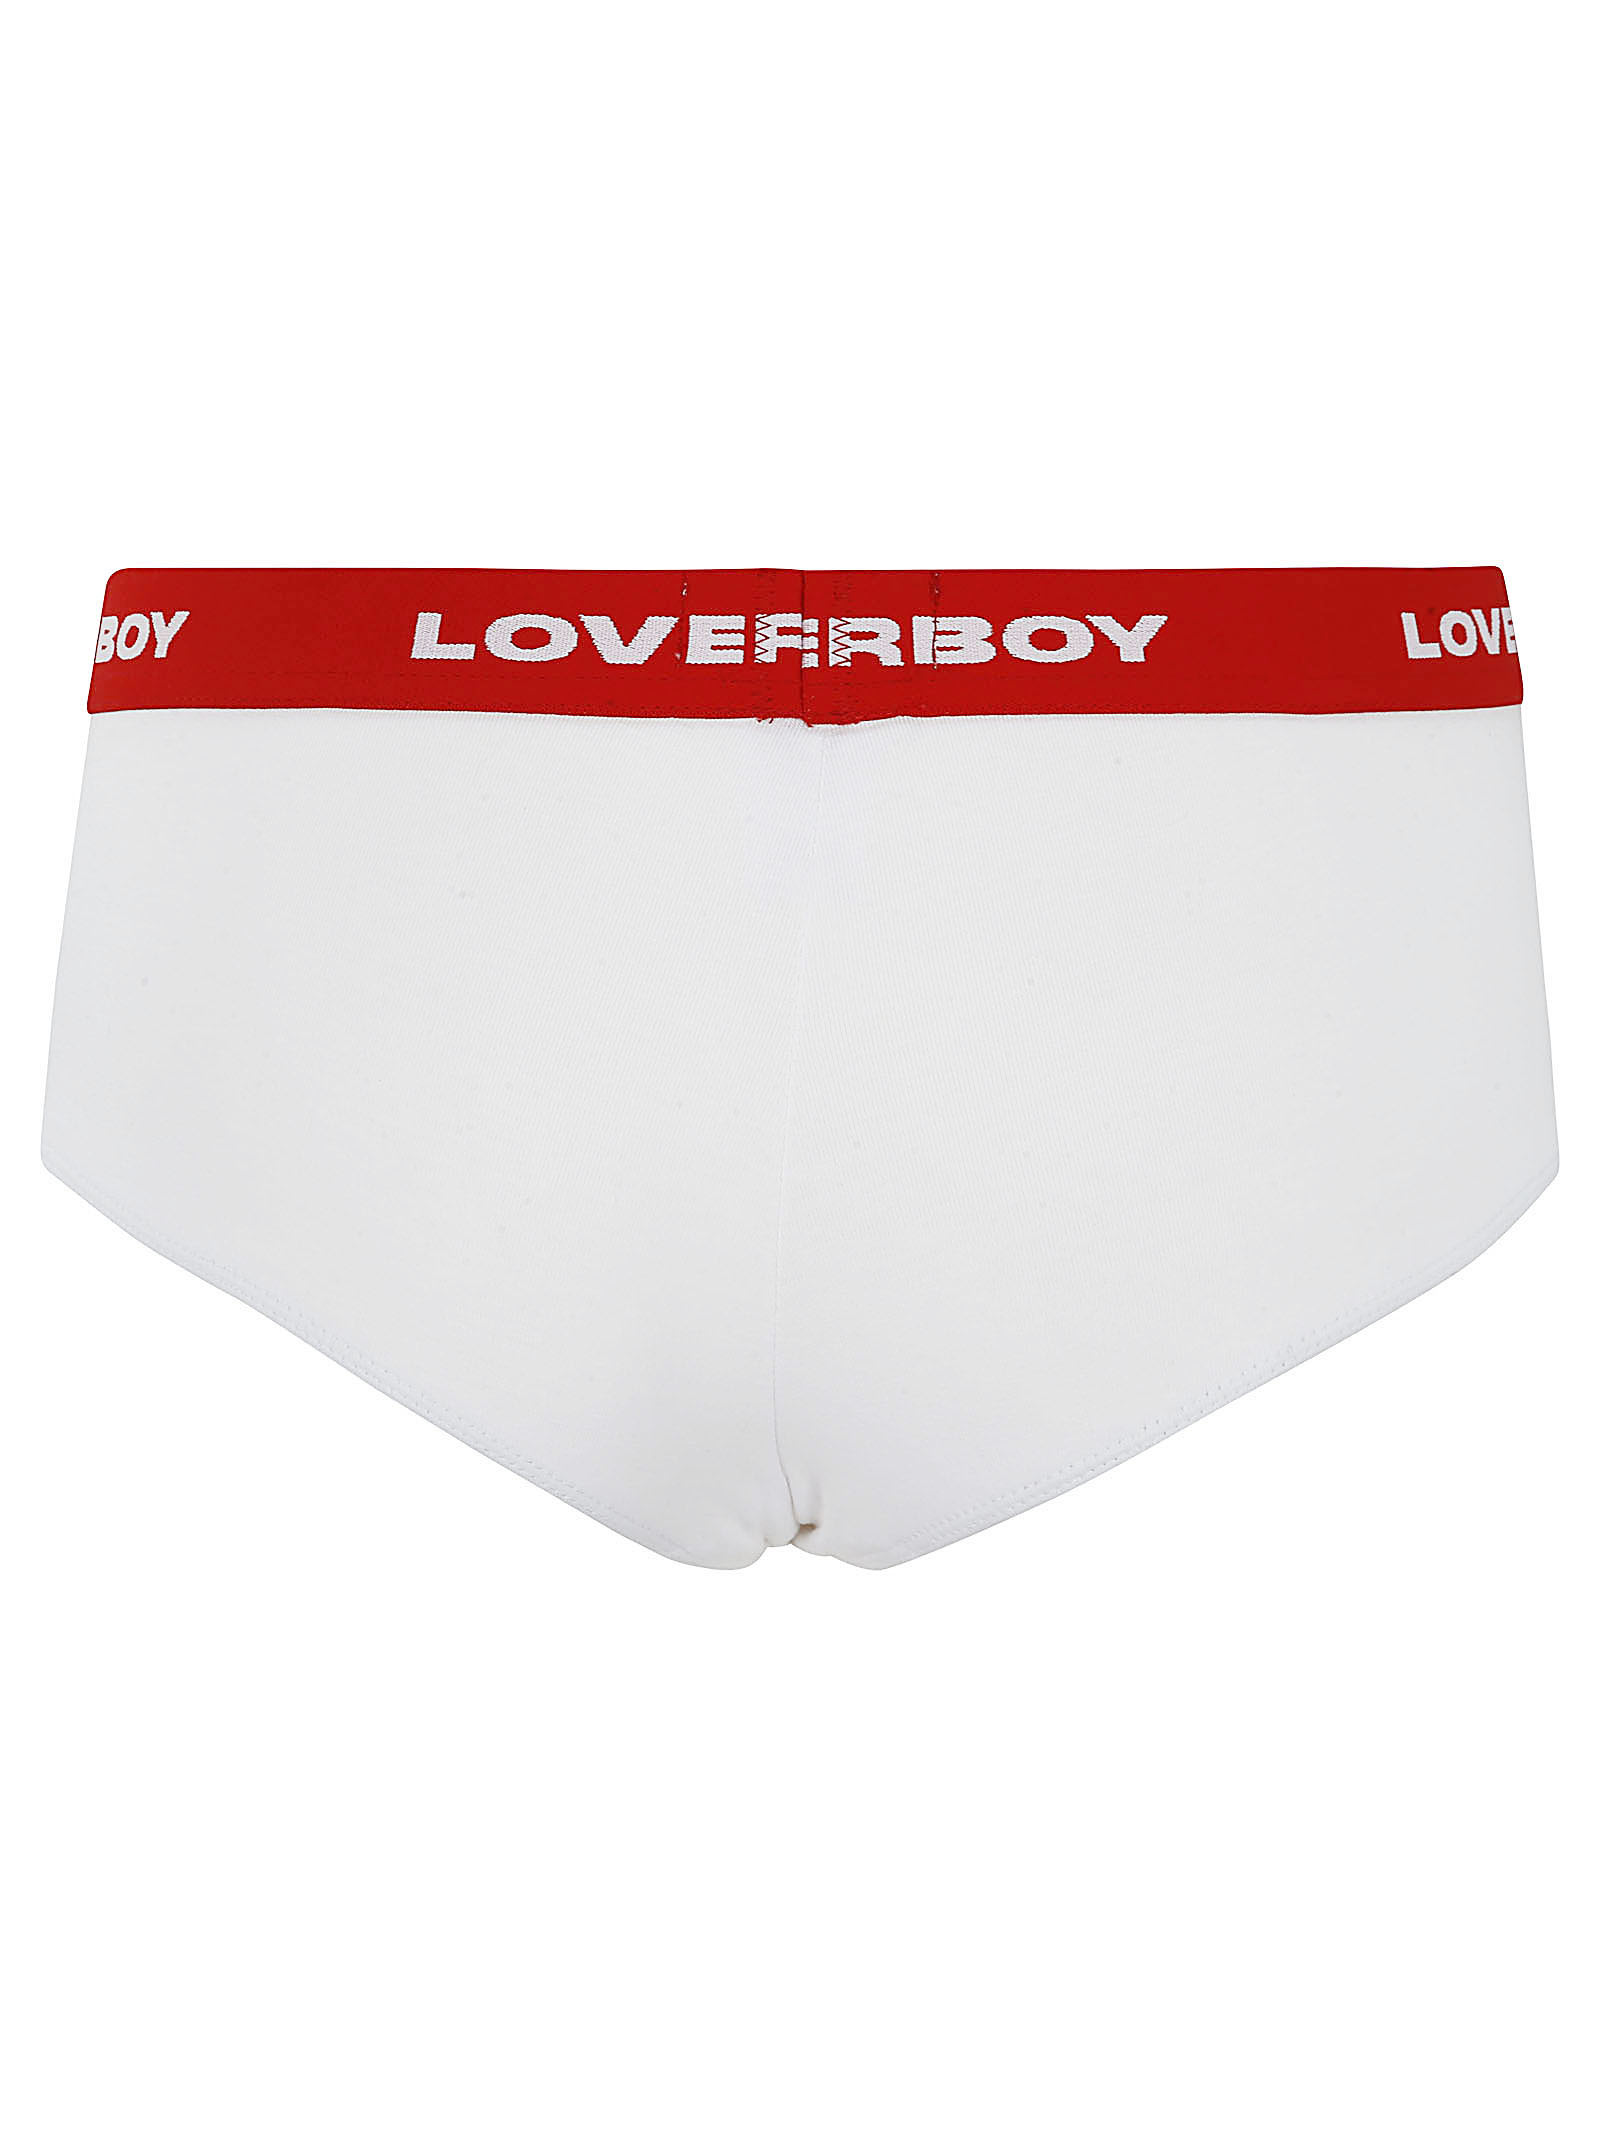 Charles Jeffrey Loverboy #n# Loverboy Short Multipack | Smart Closet